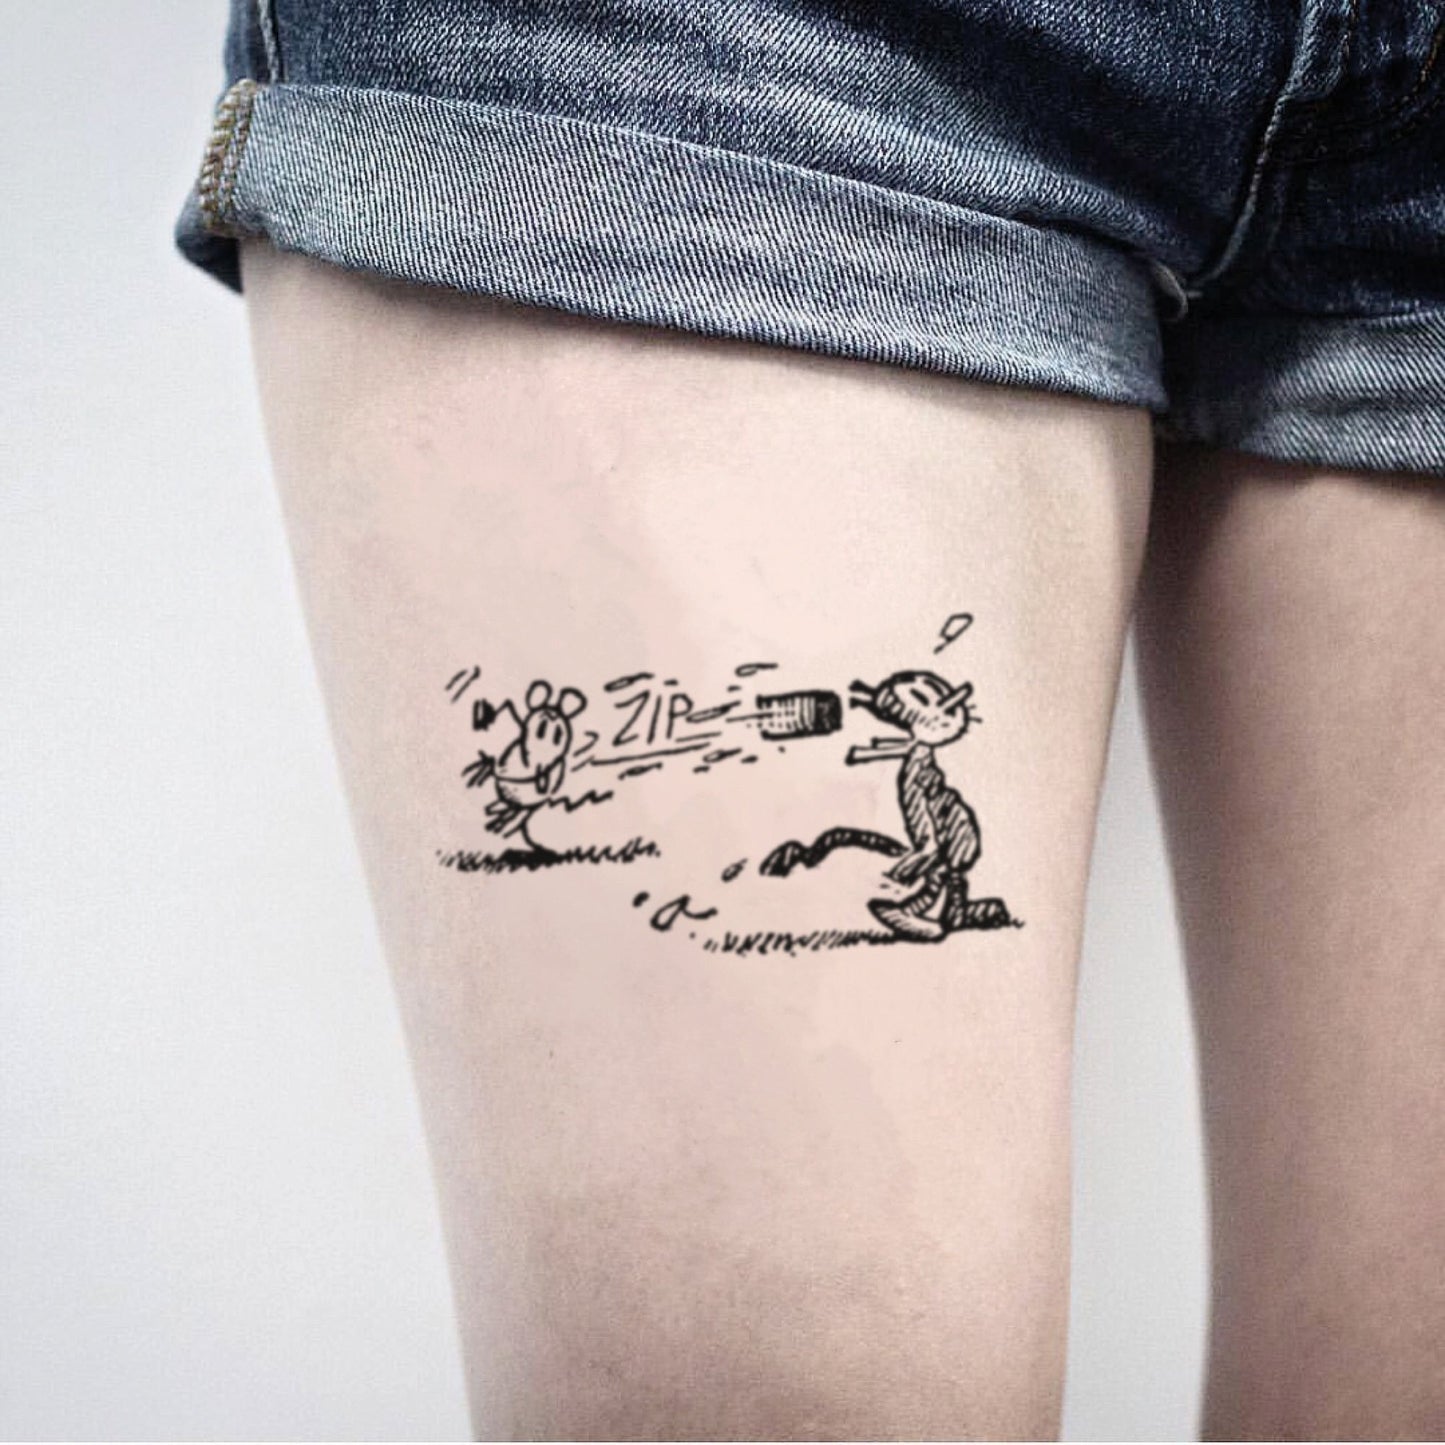 fake medium krazy kat illustrative temporary tattoo sticker design idea on thigh